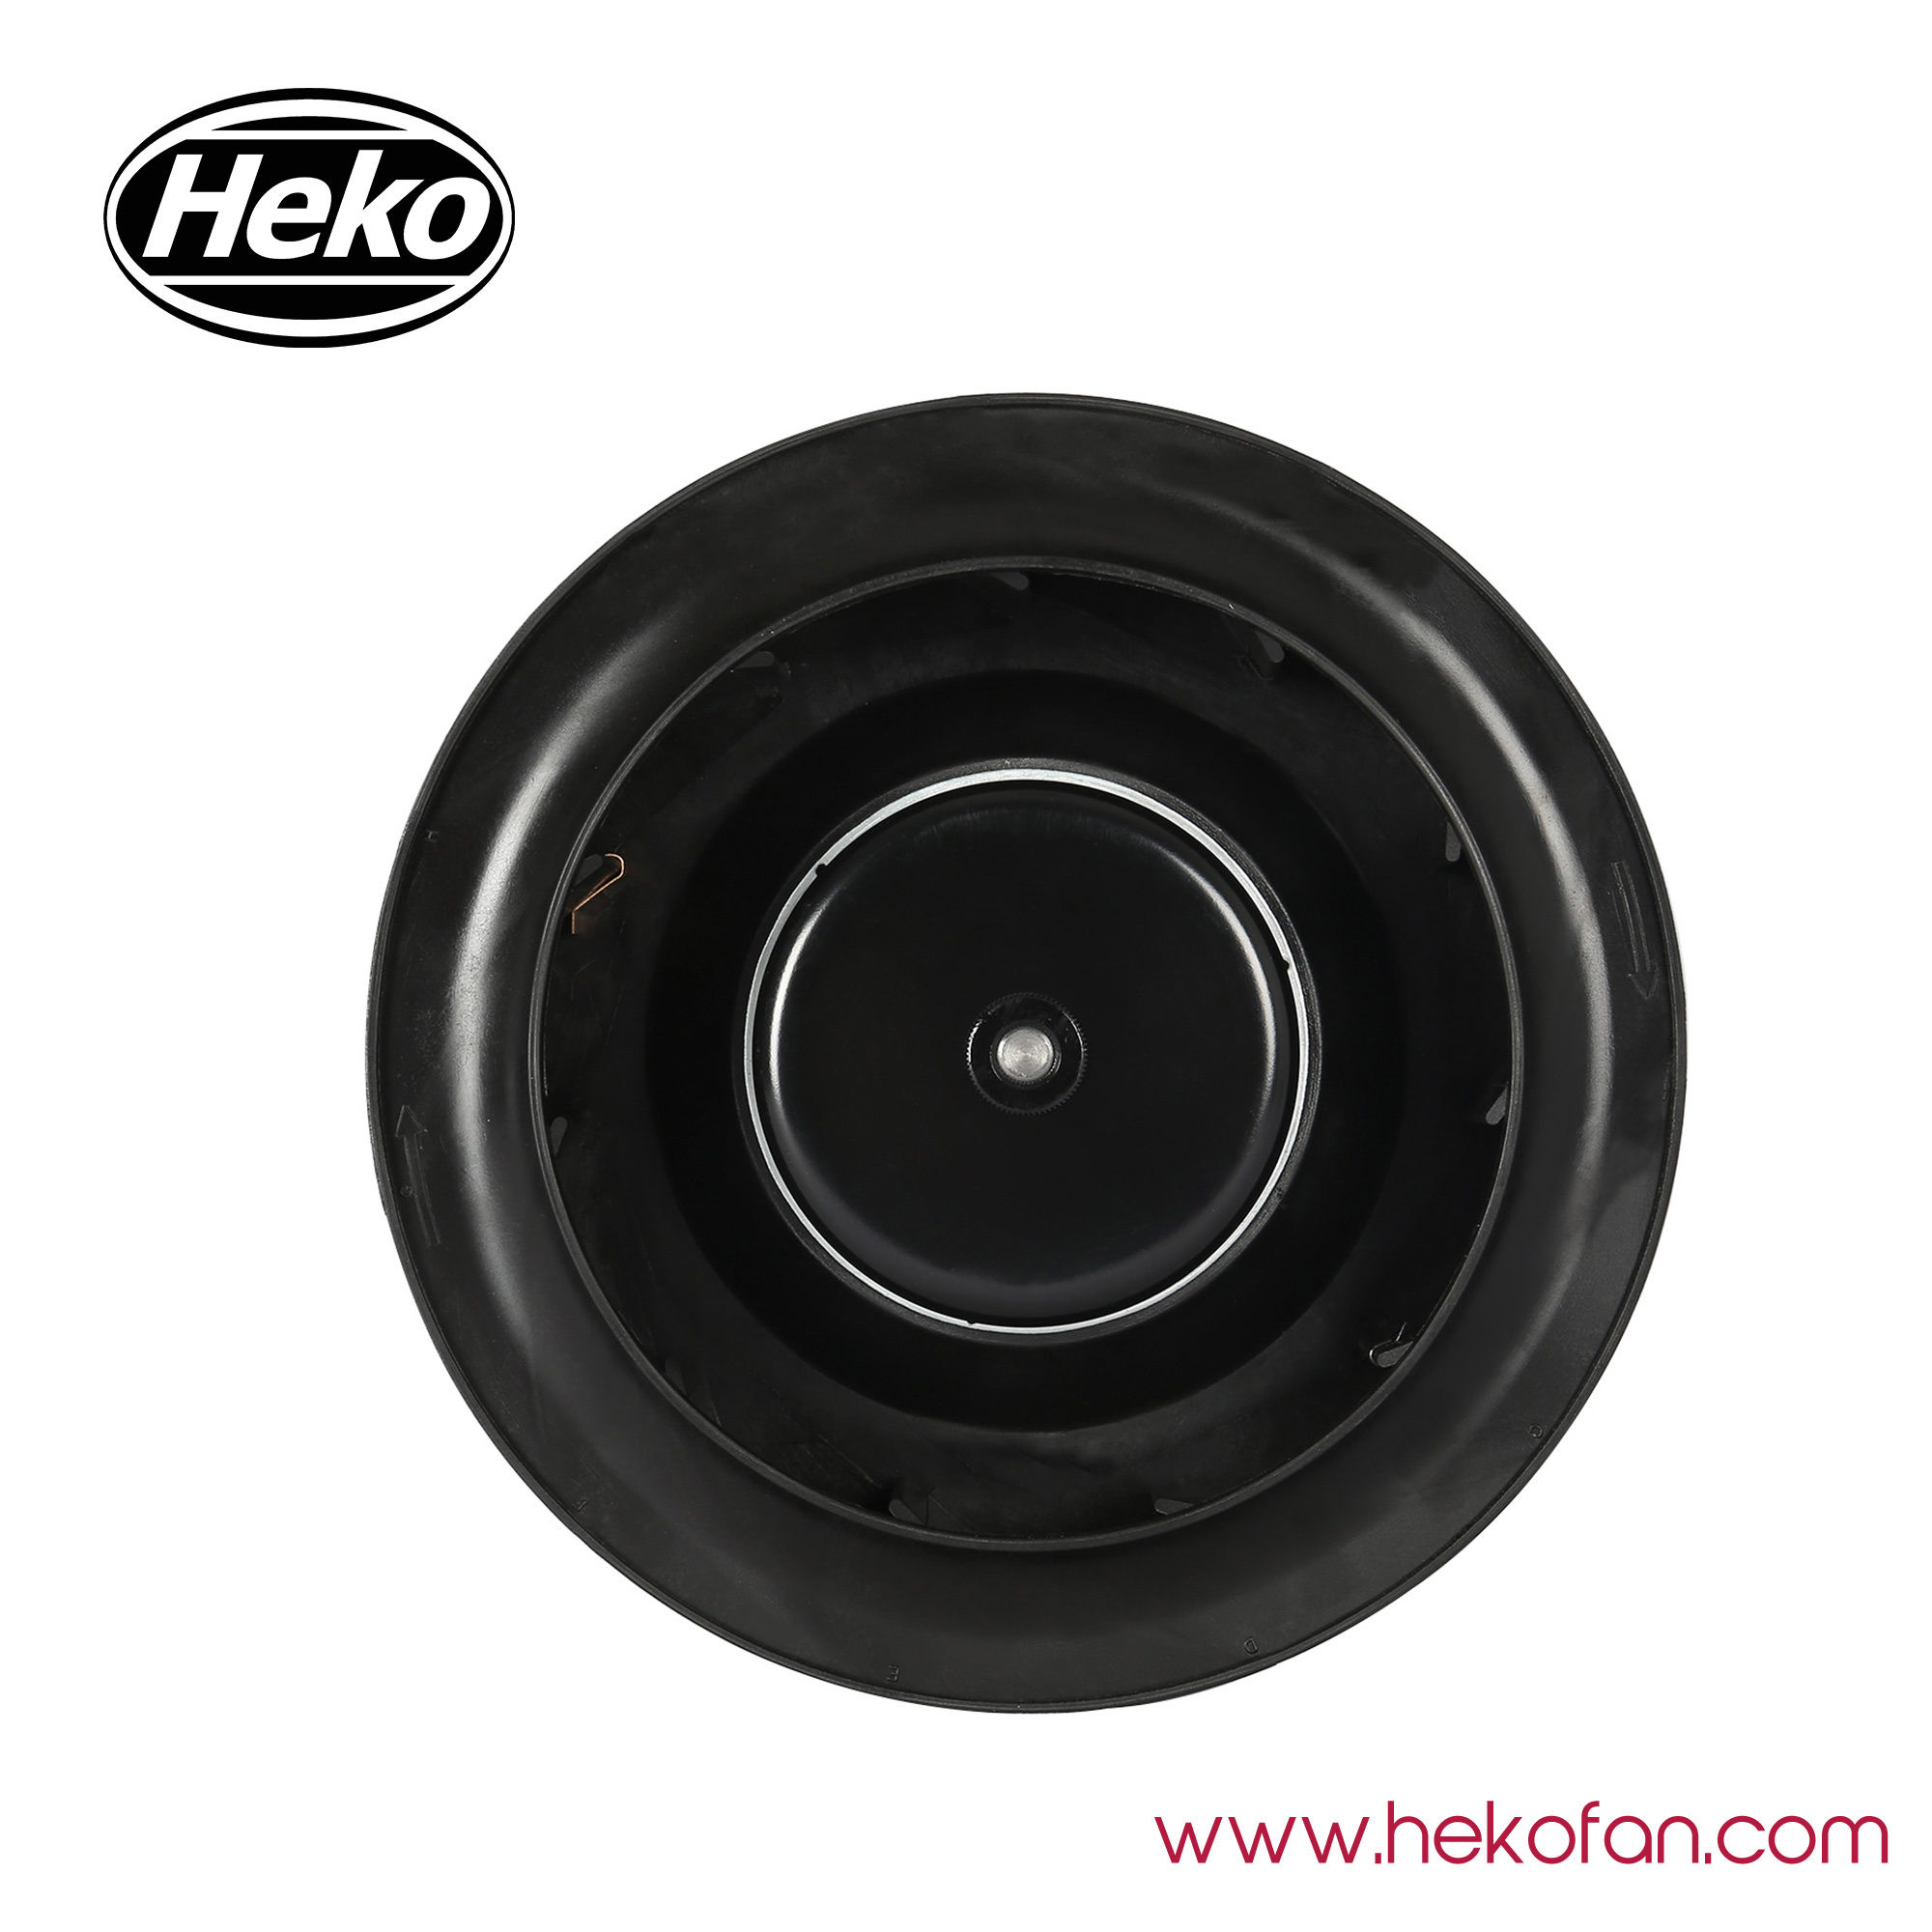 HEKO 225mm 230VAC High Pressure Kitchen Hood Centrifugal Fan